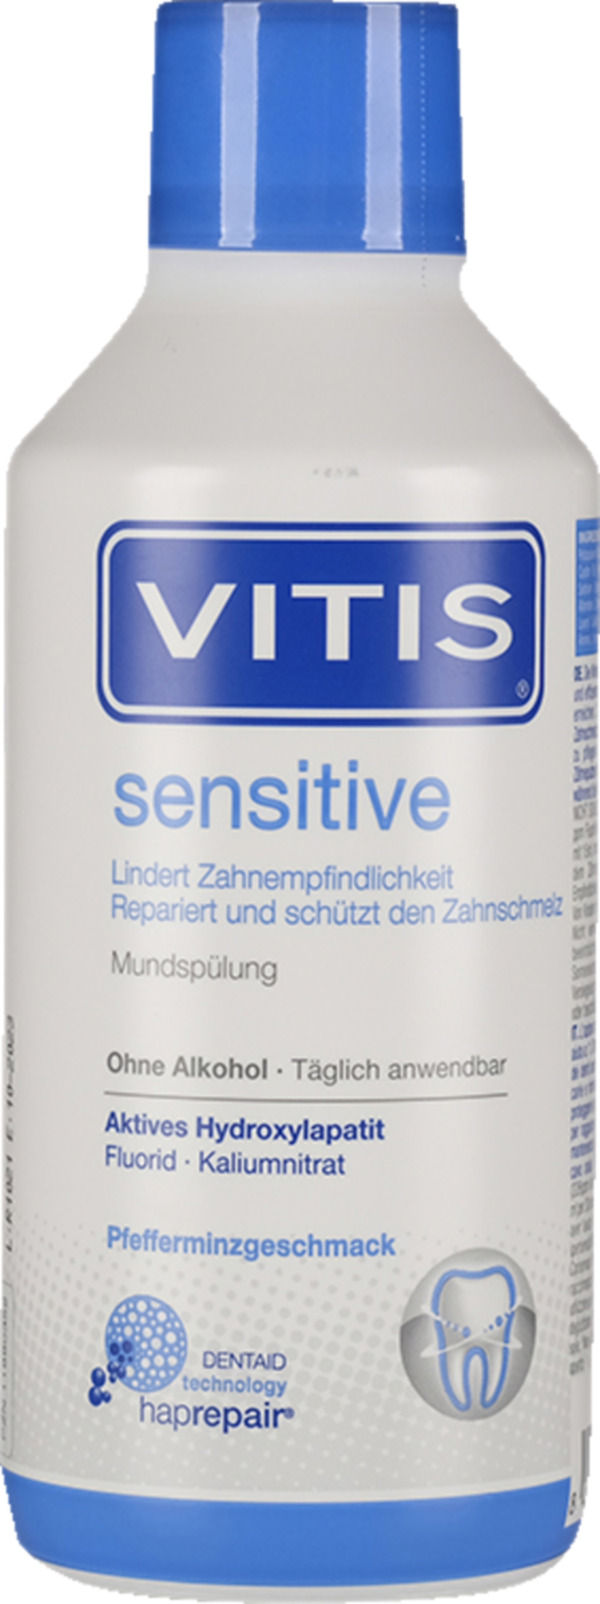 Bild 1 von VITIS Sensitive Mundspülung